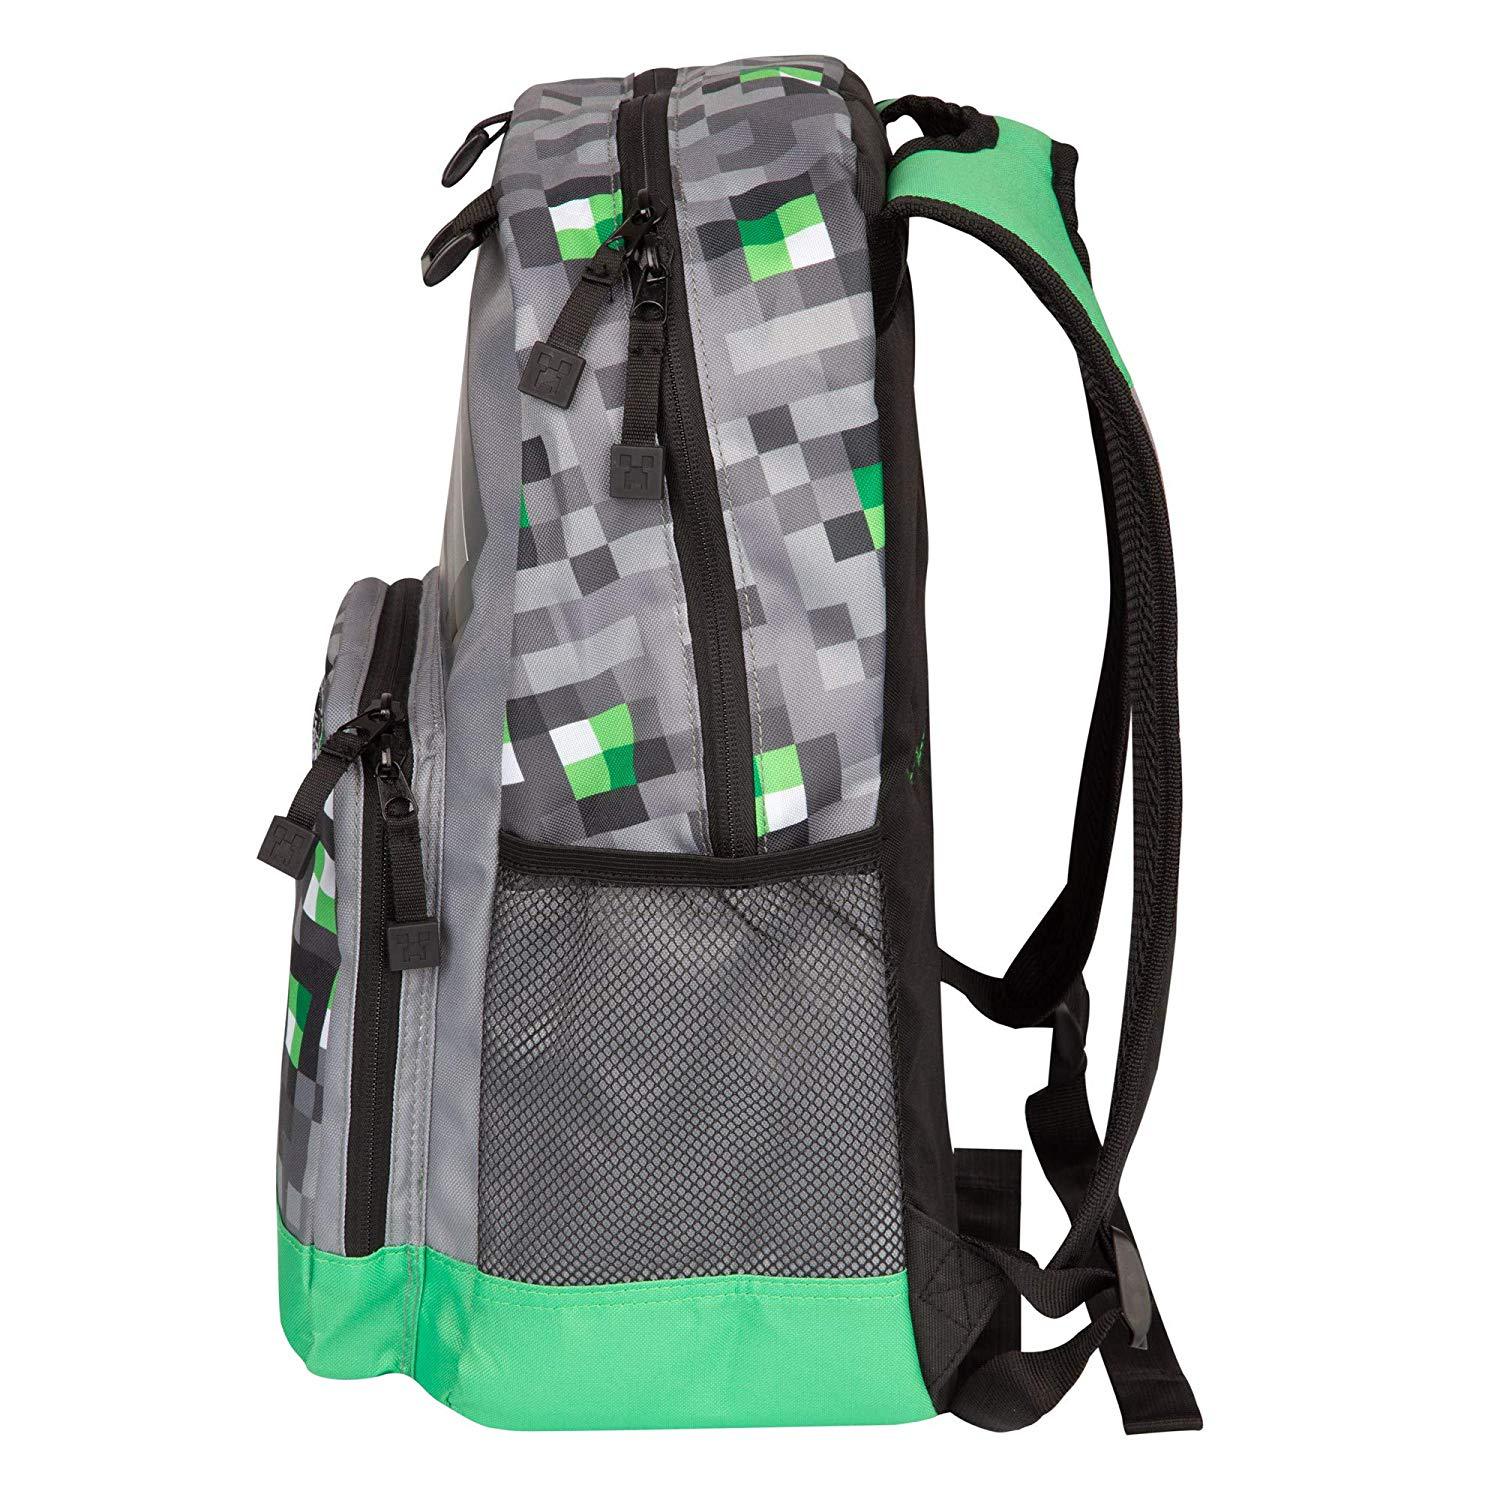 Creeper Green schoold backpack for kid cool school bag - CIVIBUY